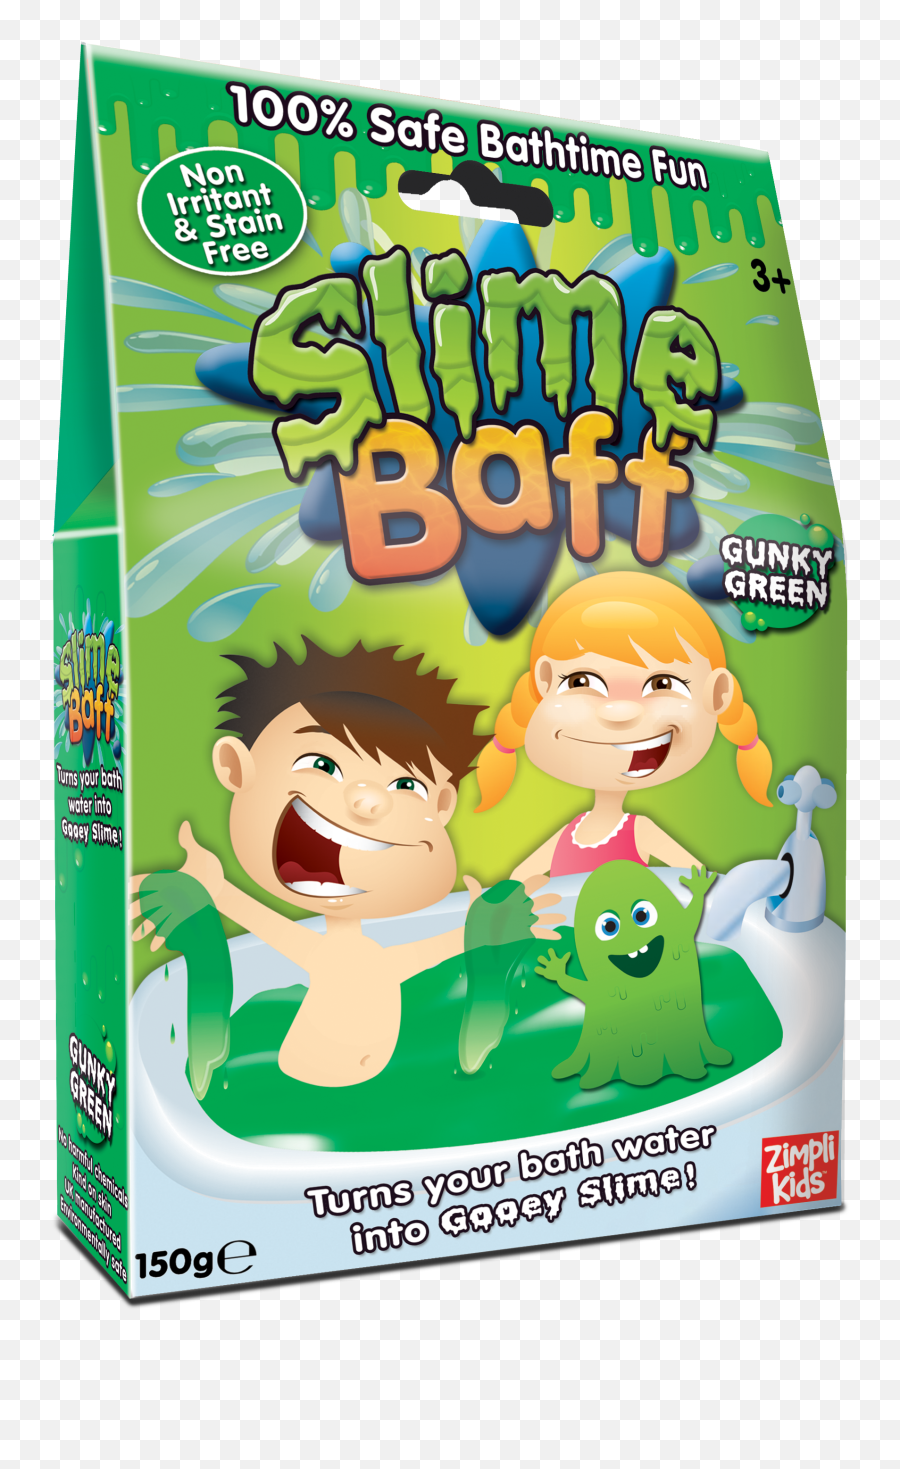 Zimpli Kids - Slime Baff Green Zimpli Slime Baff Blue Emoji,Water Squirt Emoji